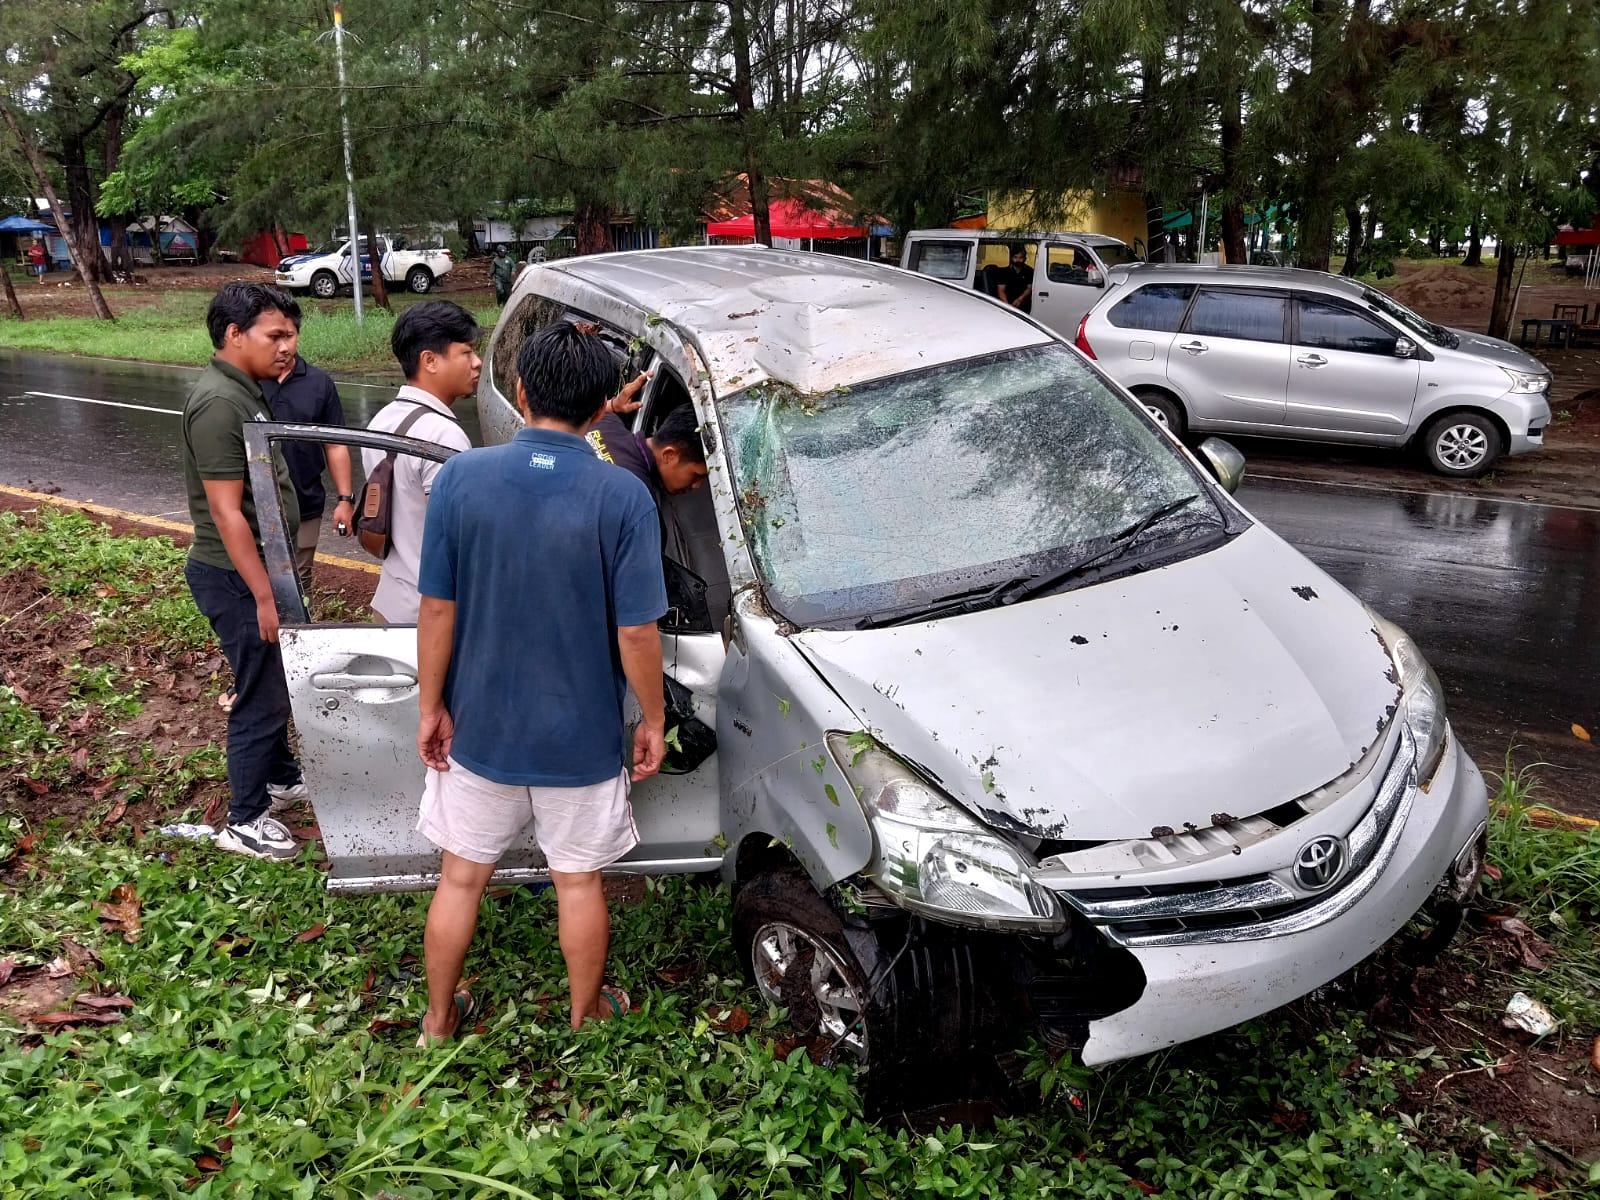 Jalan Licin, Toyota Avanza Nyungsep dan Tabrak Motor, Pengendara Dilarikan ke Rumah Sakit